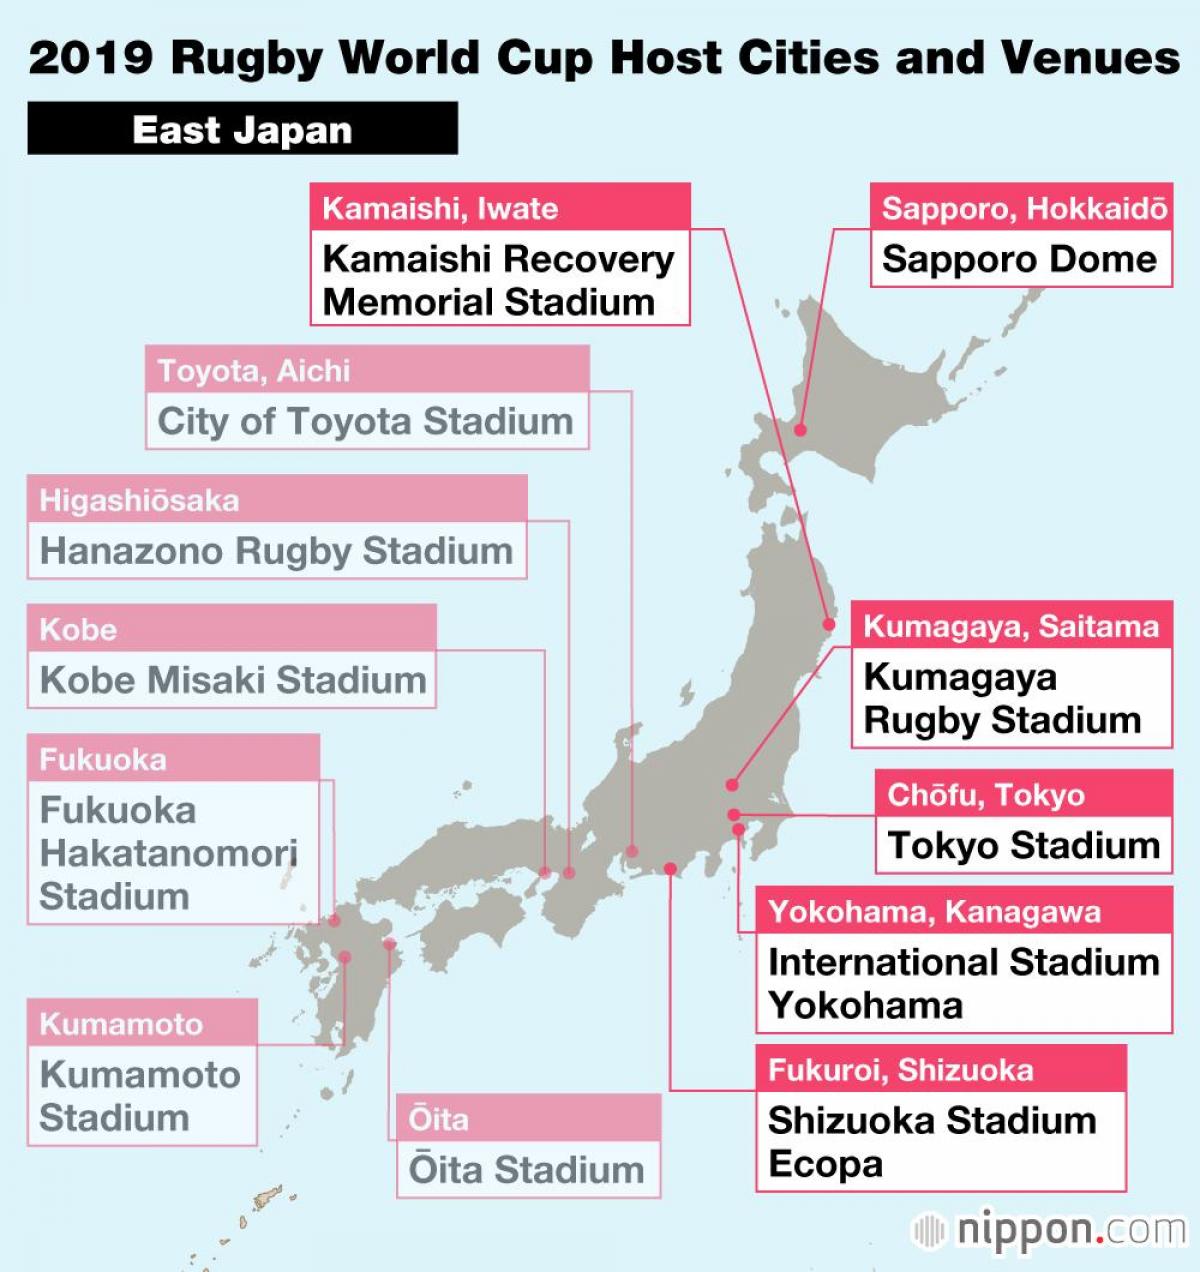 stadiums map of Japan